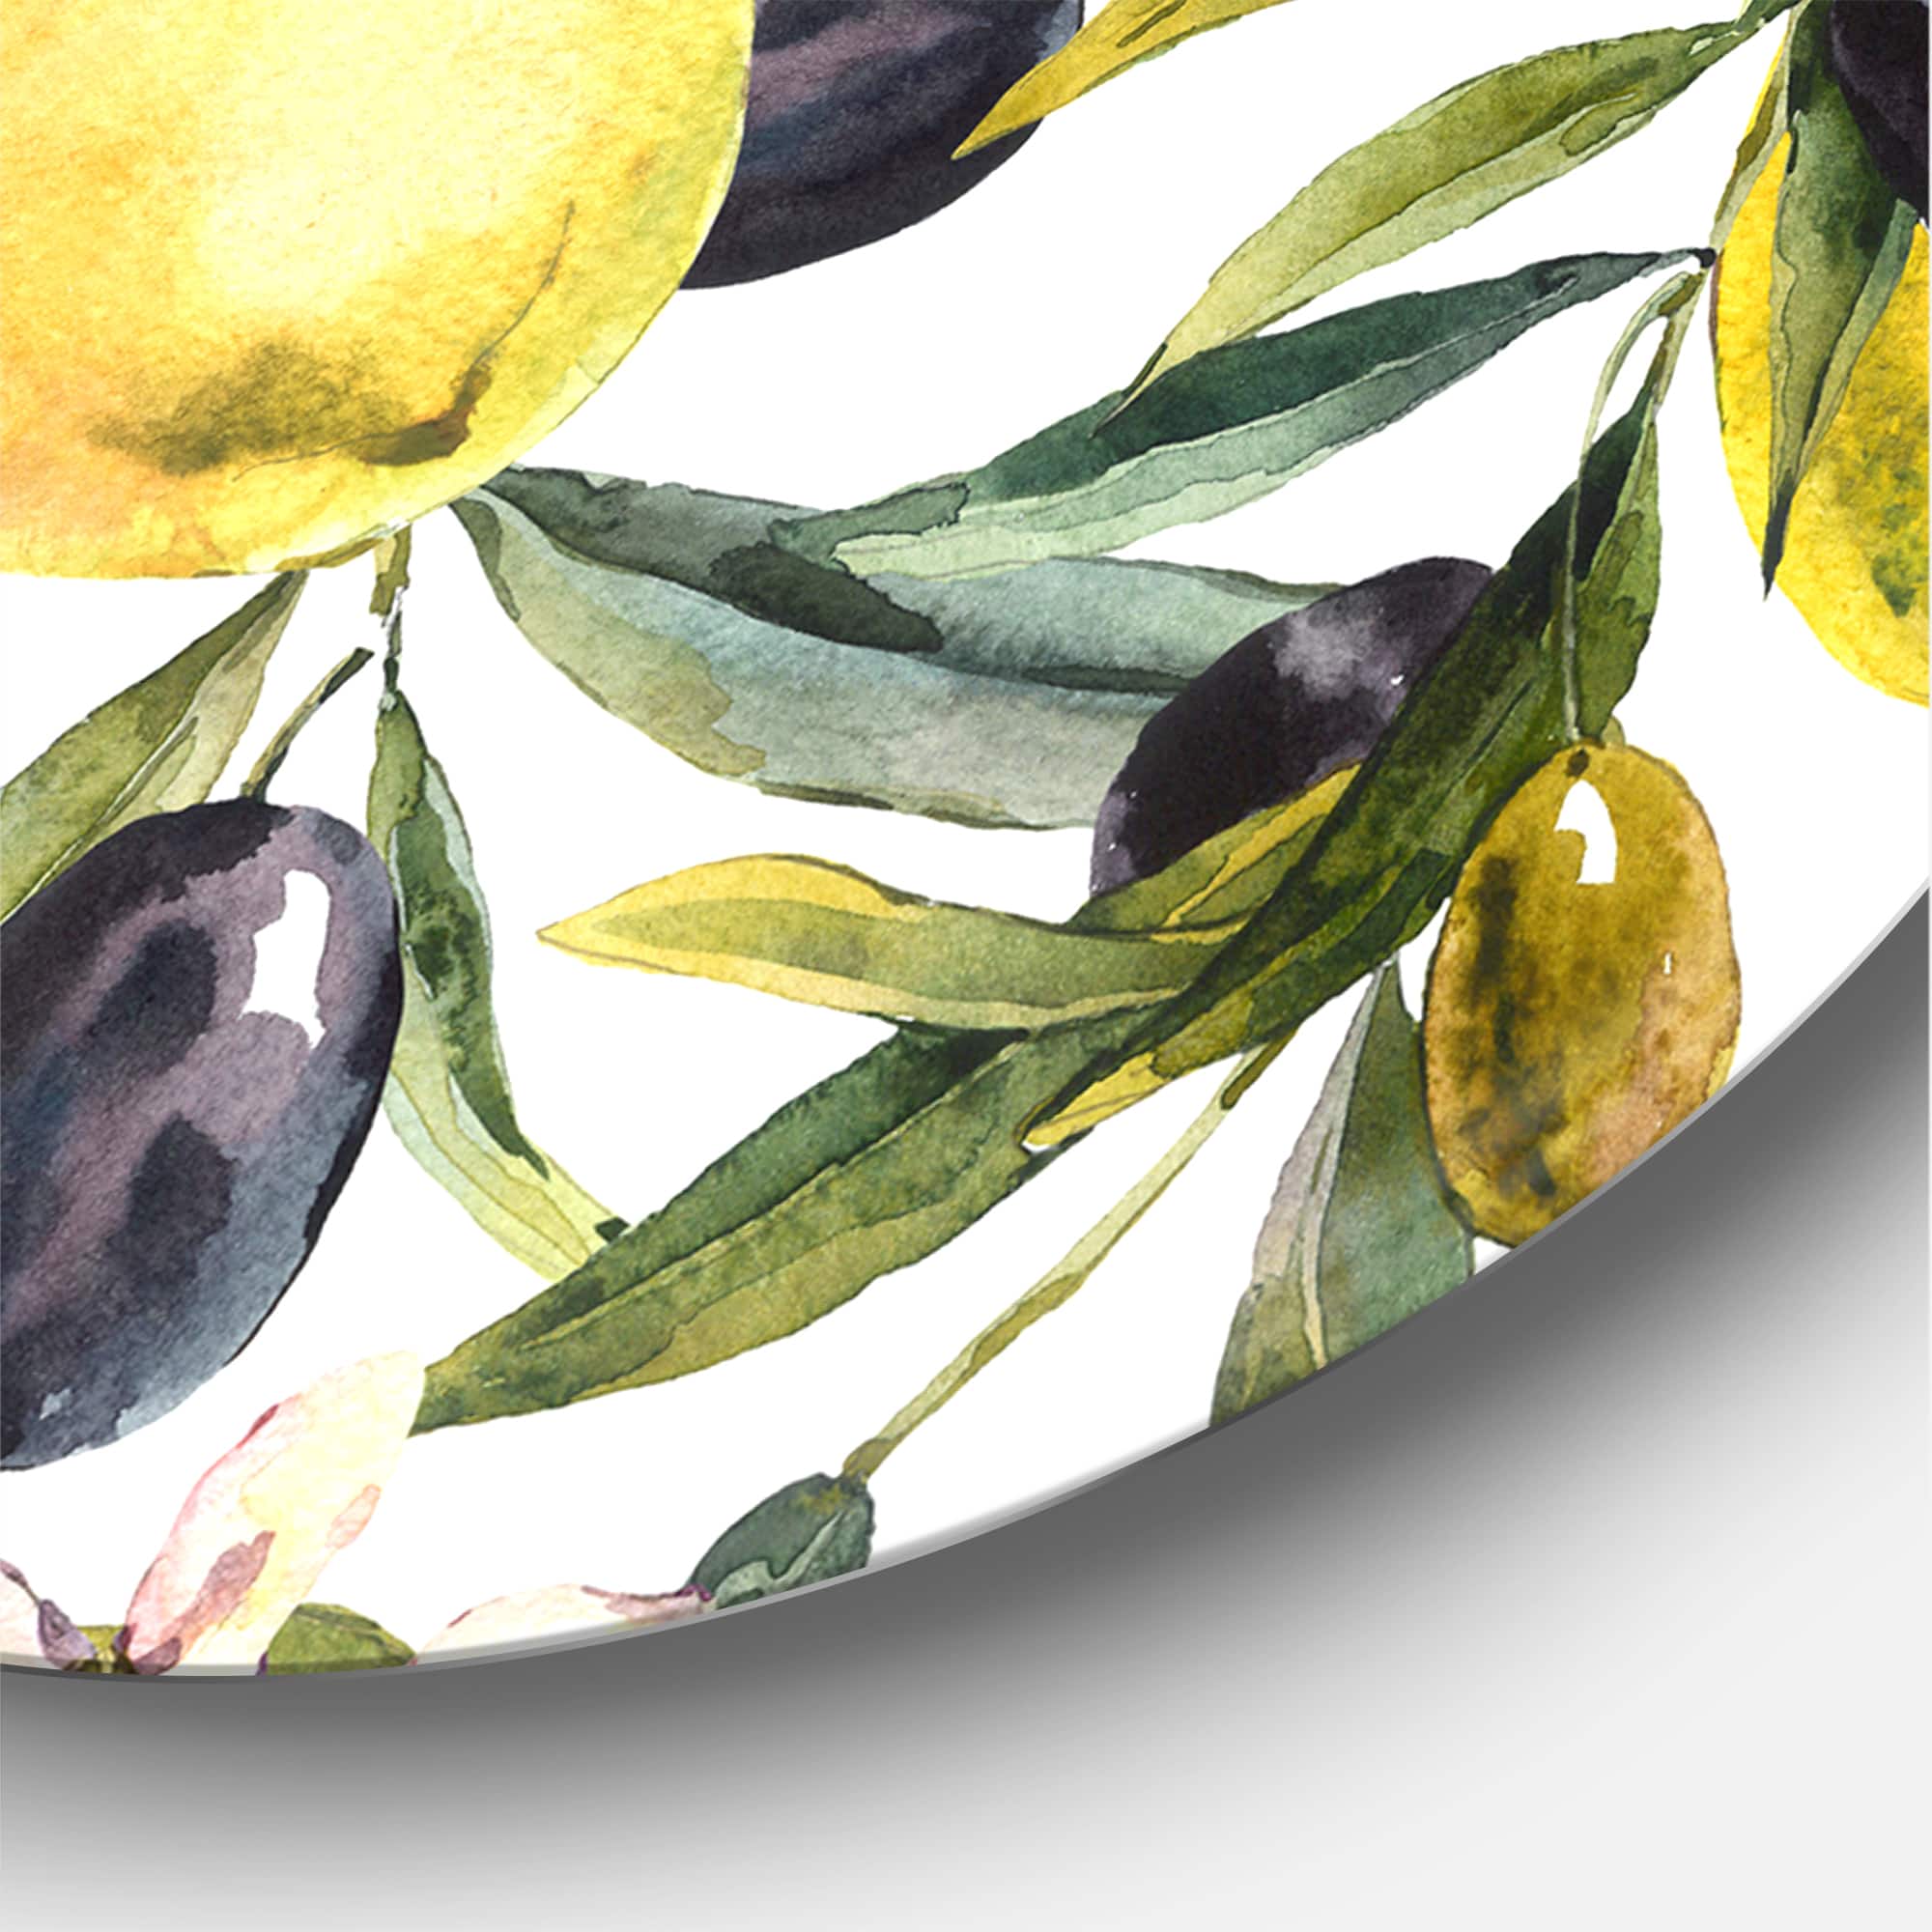 Designart - Lemon and Olive Branches I - Tropical Metal Circle Wall Art